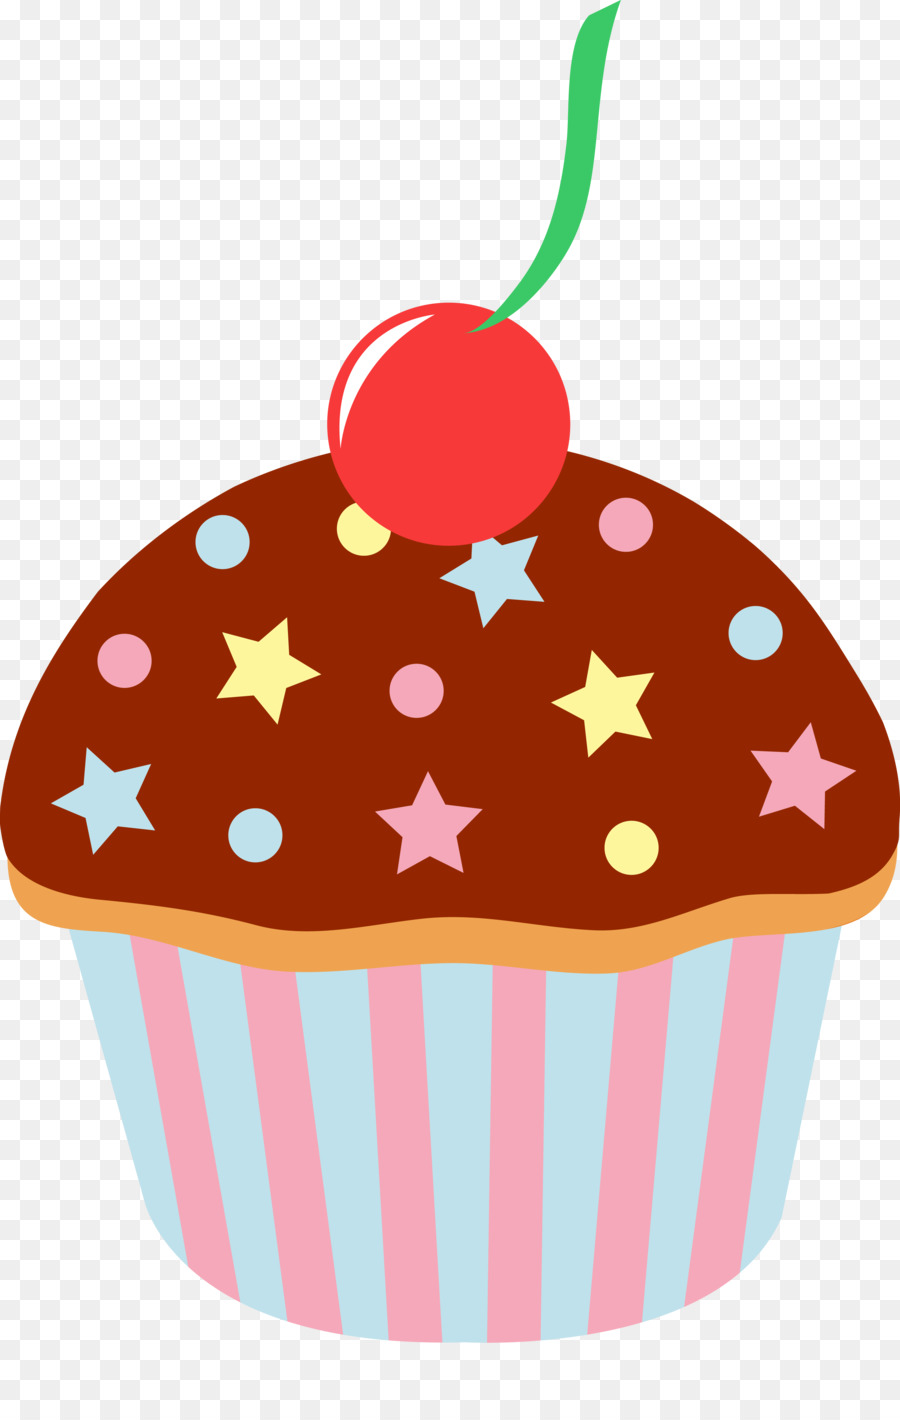 Cupcake Cartoon Sprinkles Clip art - Cute Cake Cliparts png download - 3053*4765 - Free Transparent Cupcake png Download.